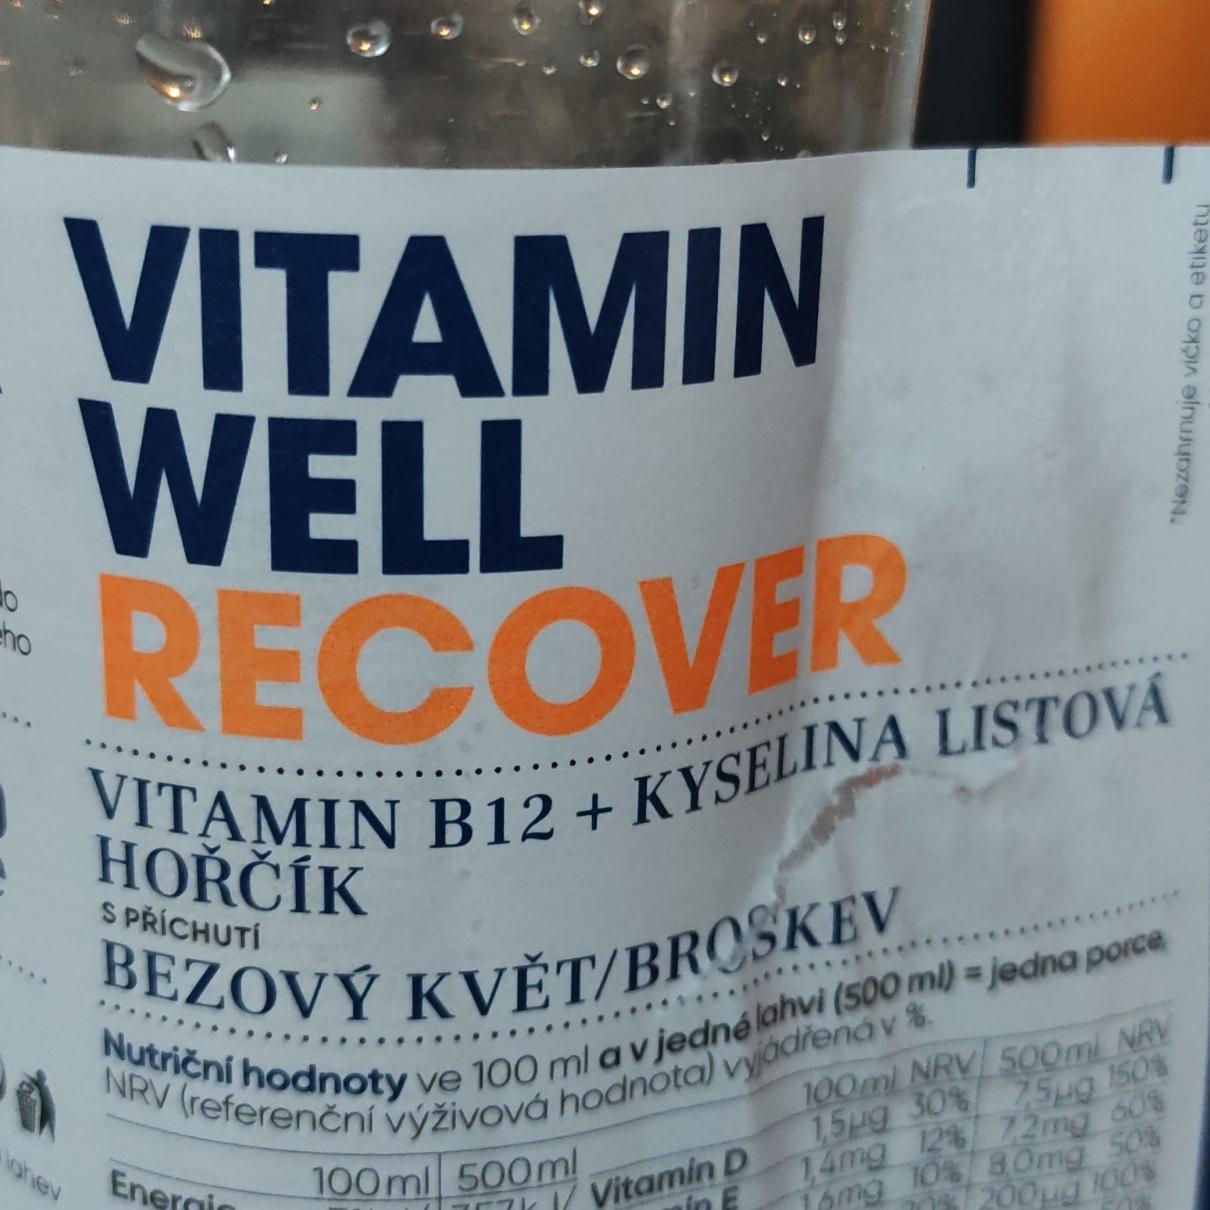 Fotografie - Recover Bezový květ/Broskev Vitamin Well